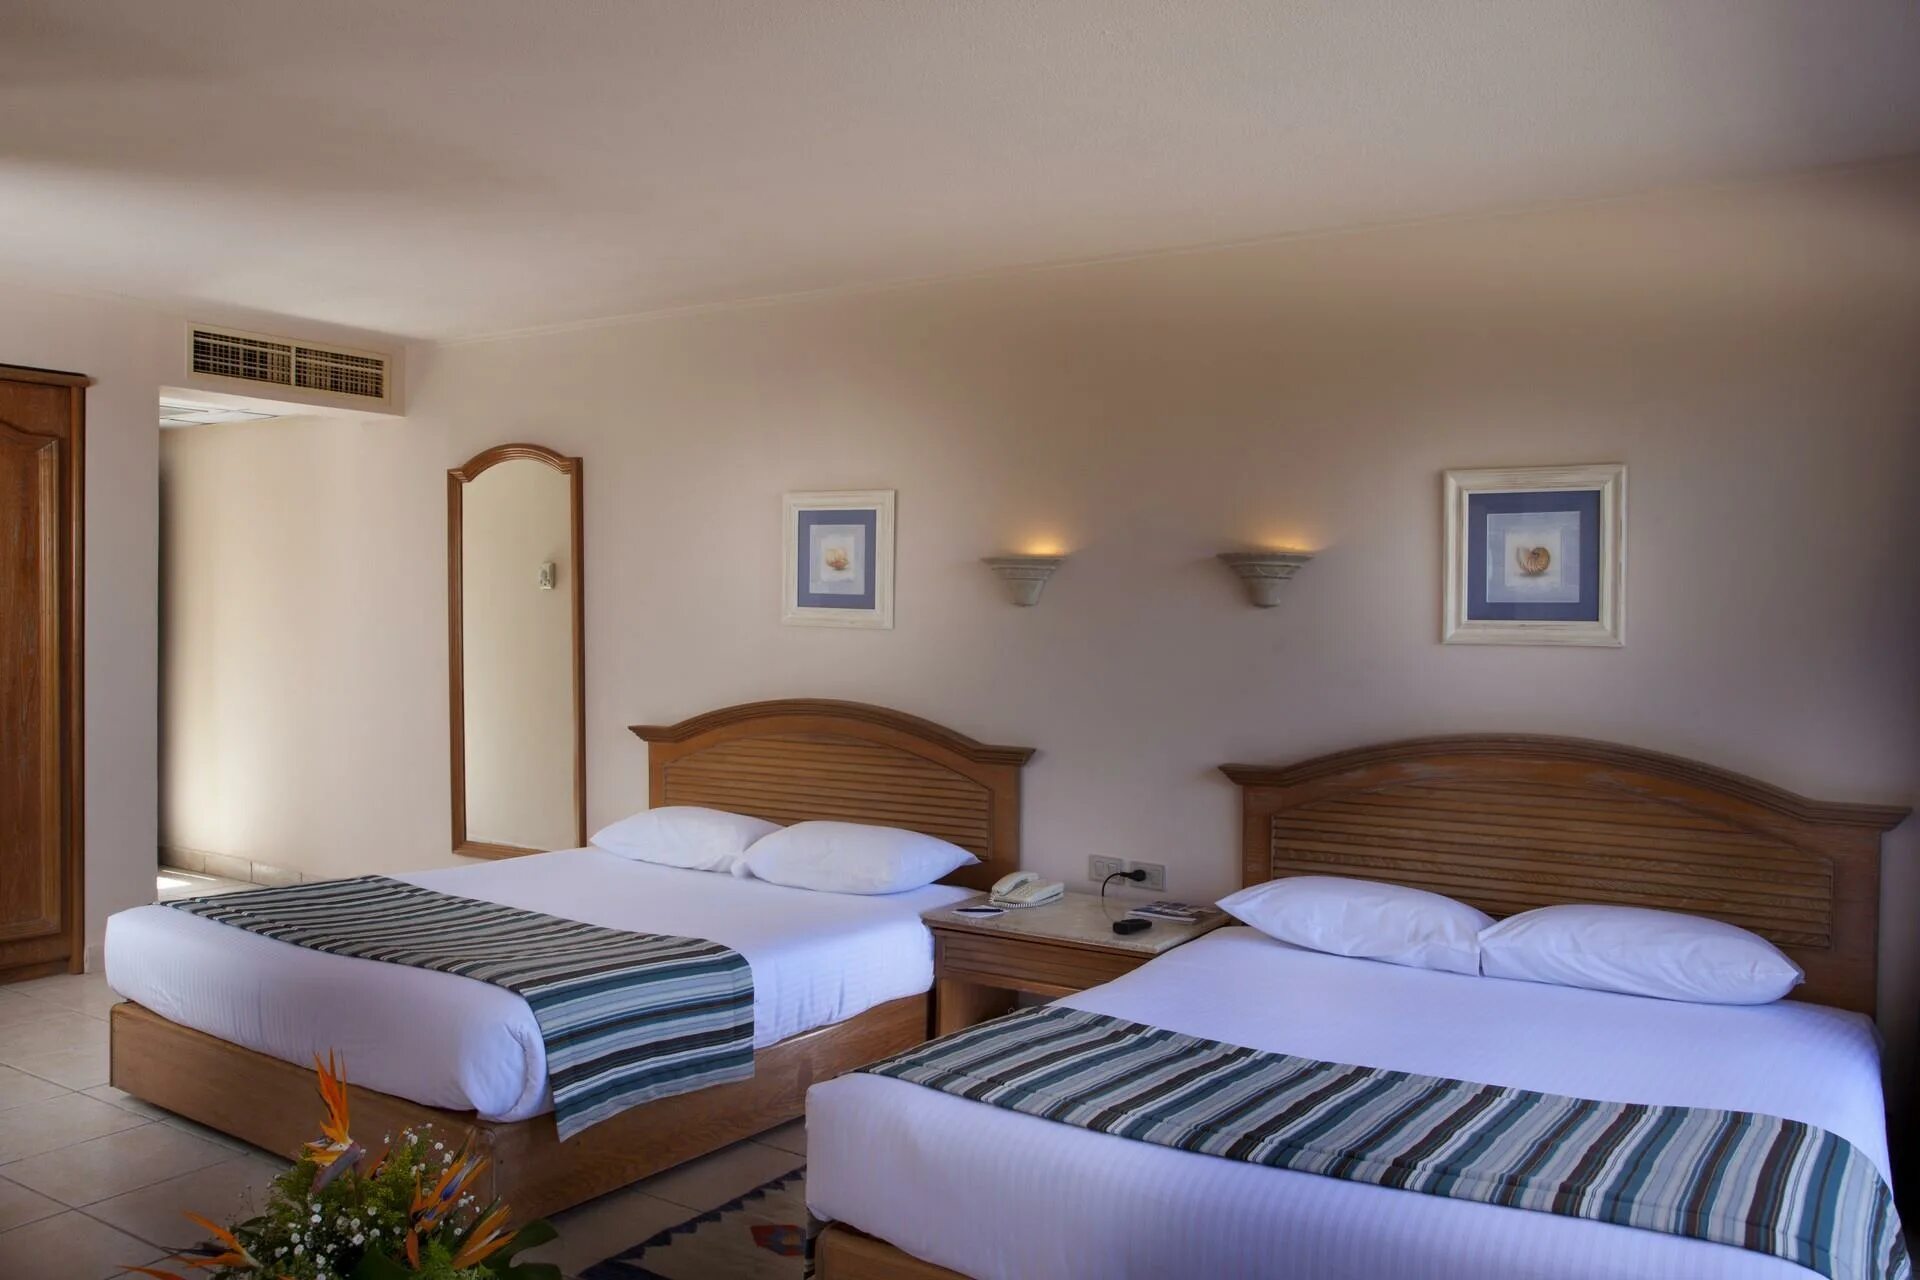 Coral beach rotana. Отель Coral Beach Hotel Hurghada. Корал Бич Хургада. Coral Beach Hotel Hurghada 4. Египет Хургада отель Корал Бич Резорт 4 звезды.